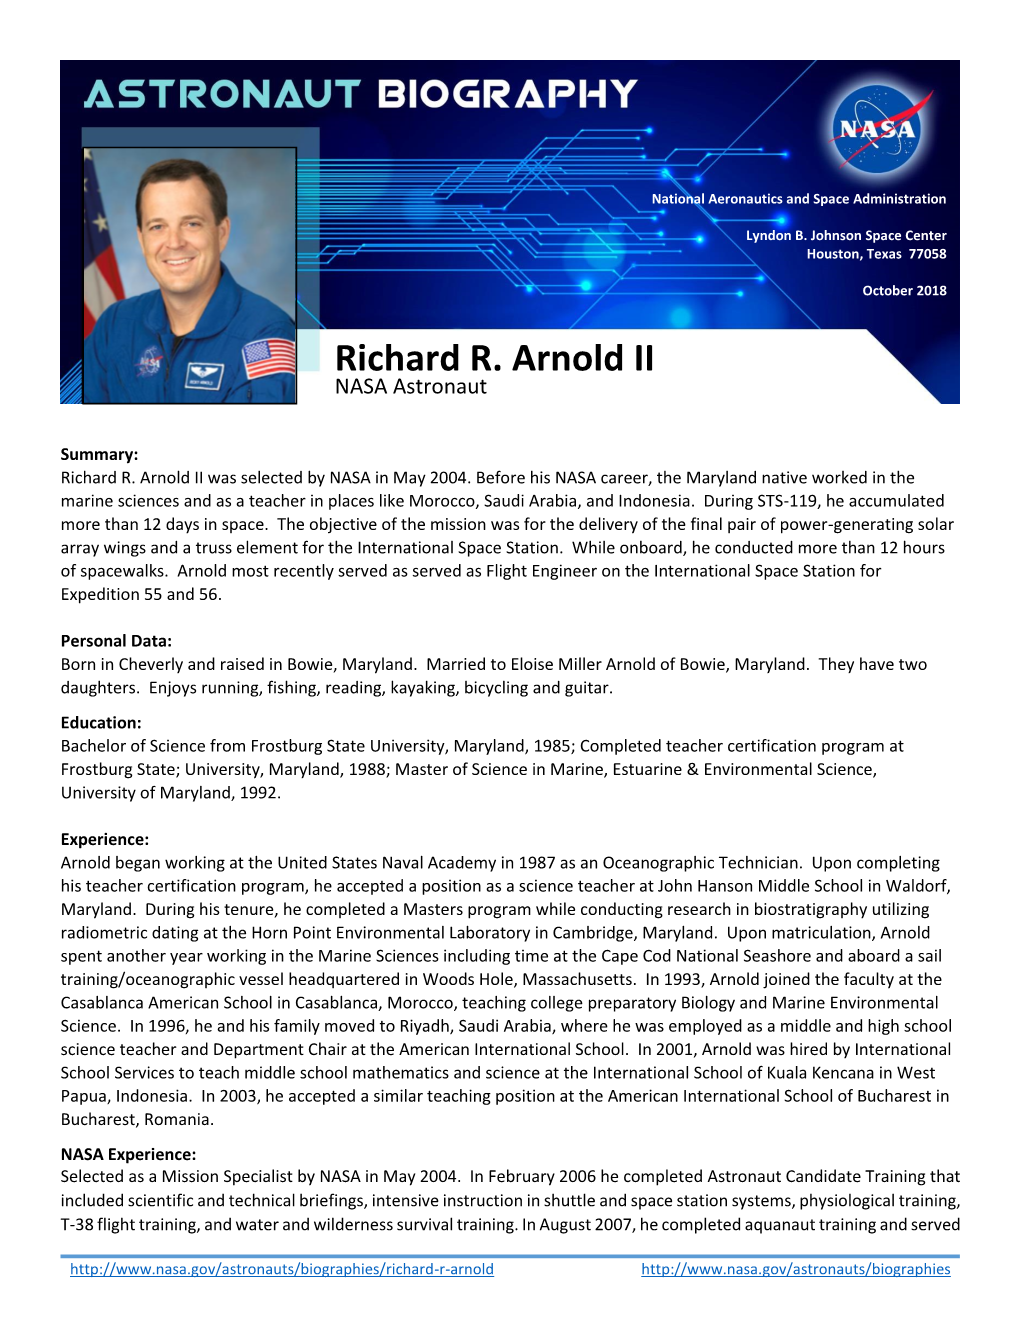 Richard R. Arnold II NASA Astronaut